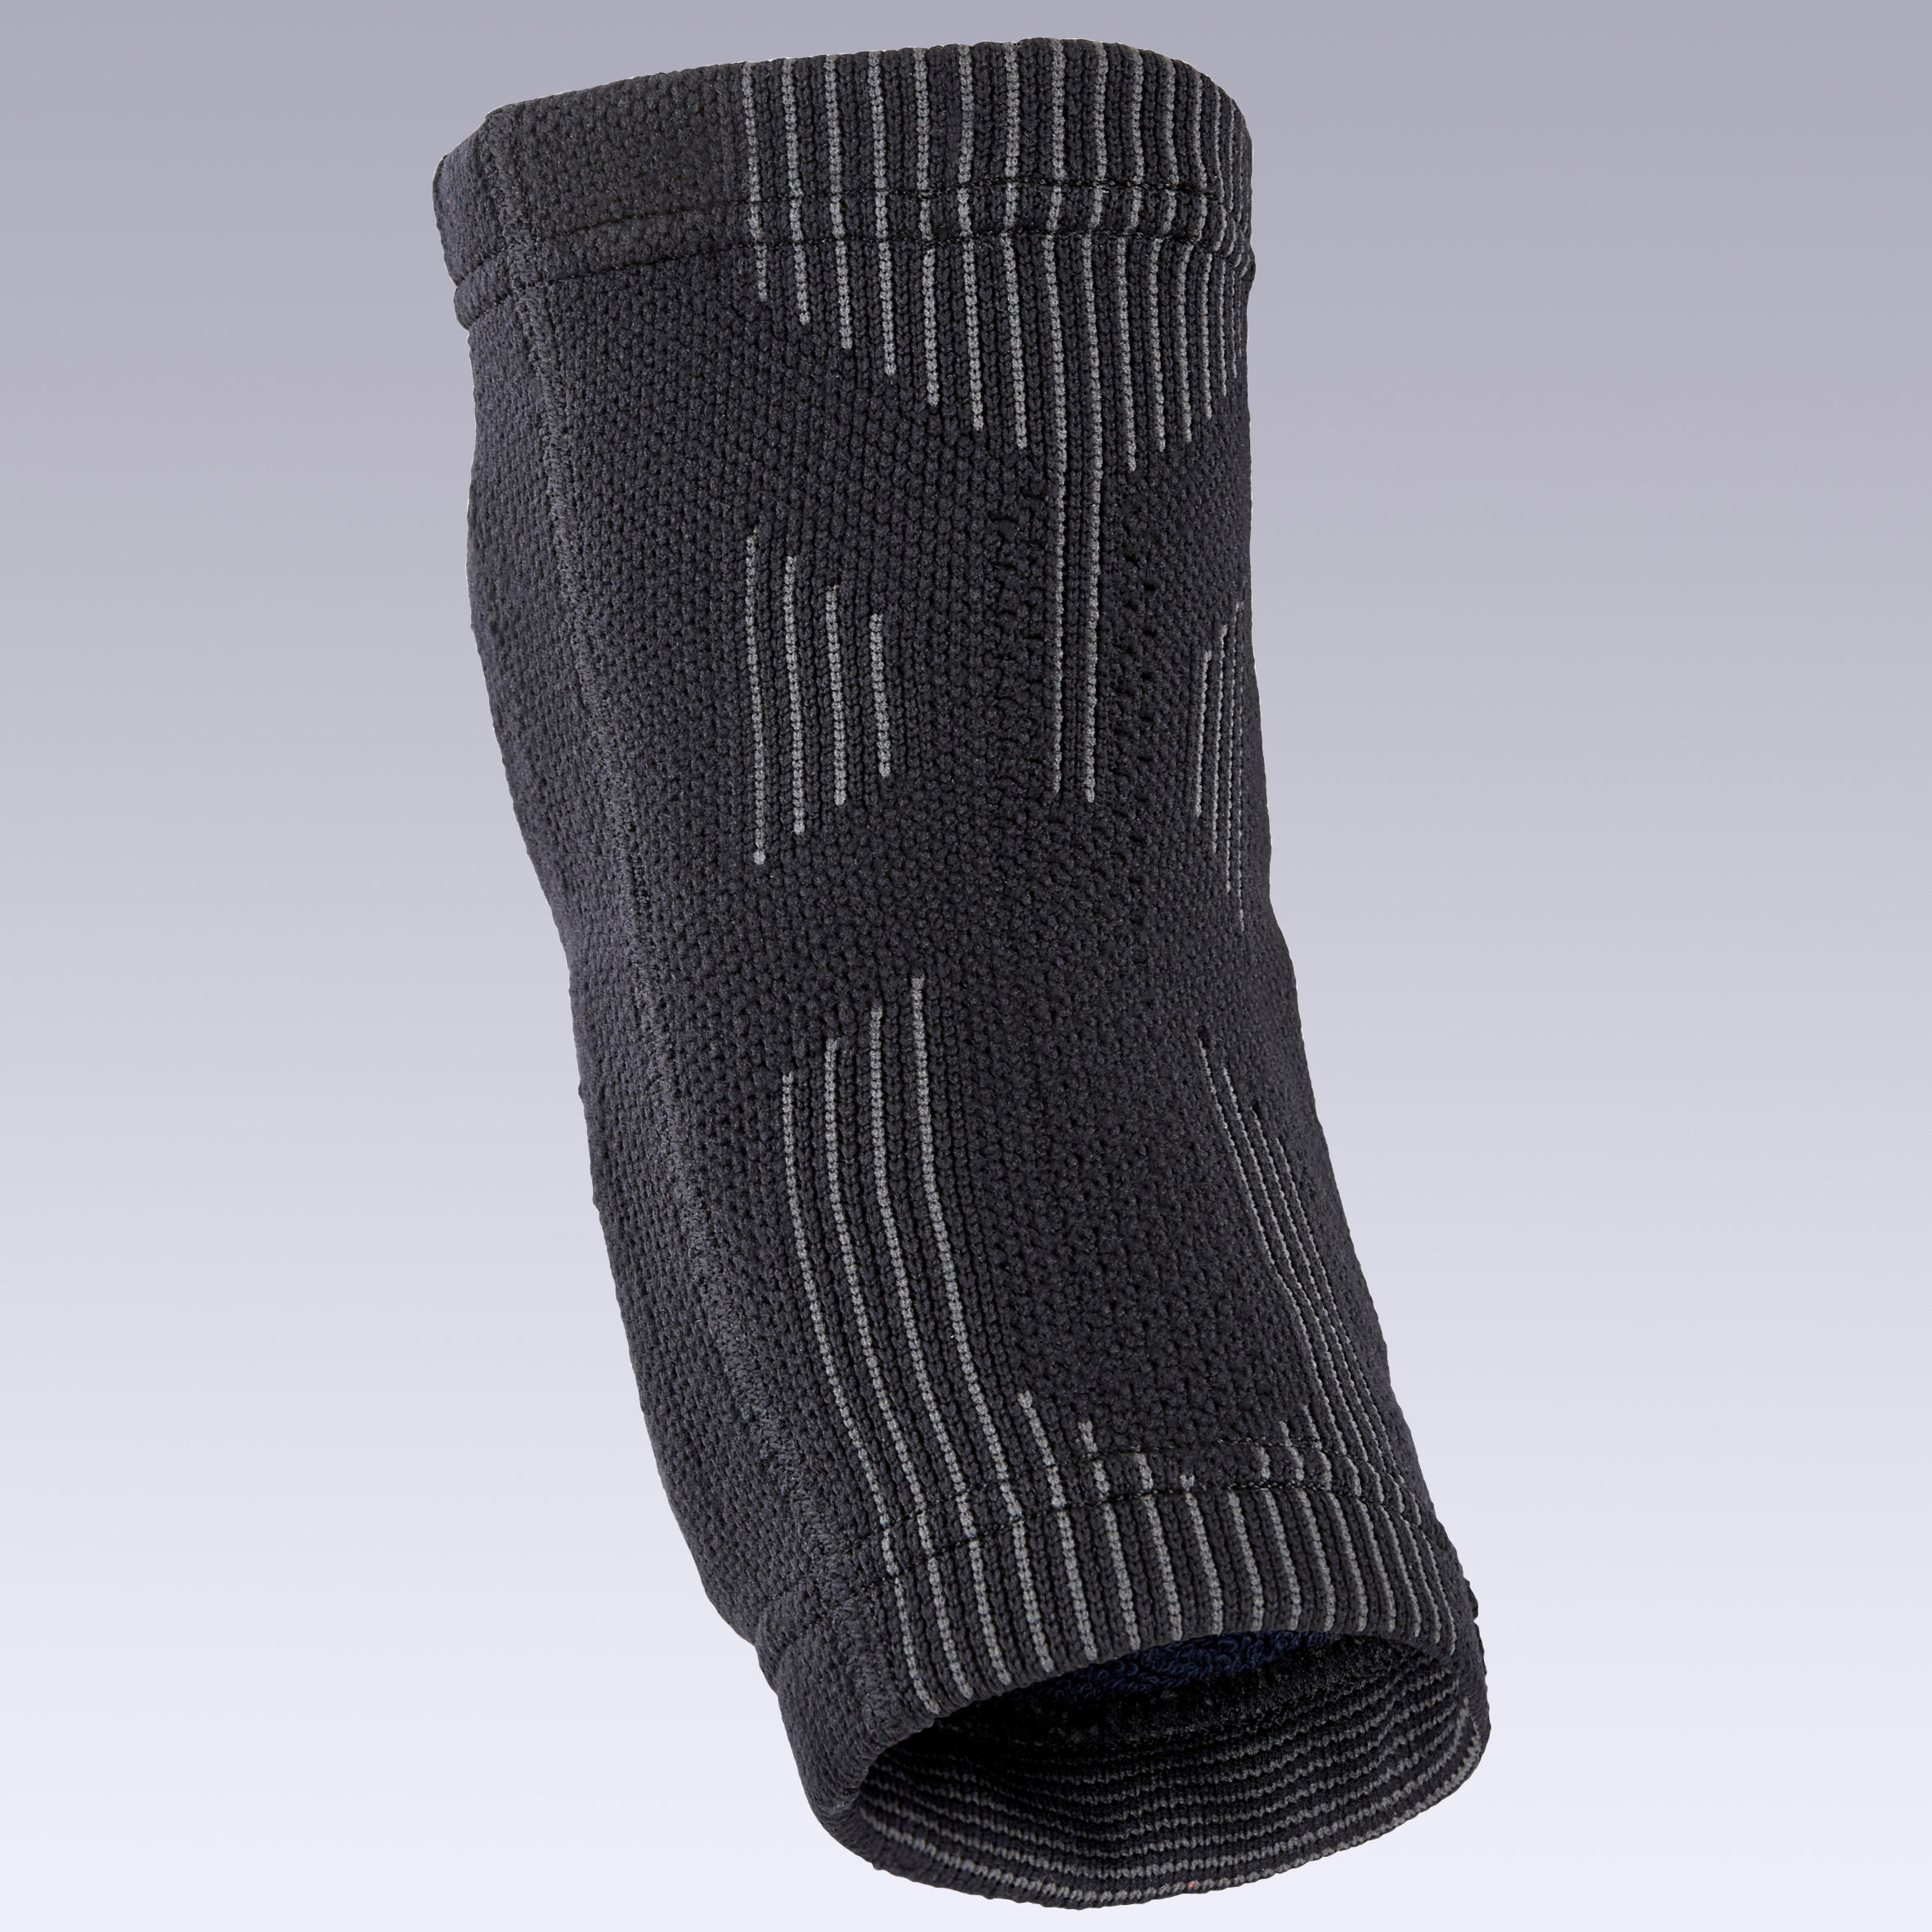 Futsal Protective Elbow Pads - Black 5/9